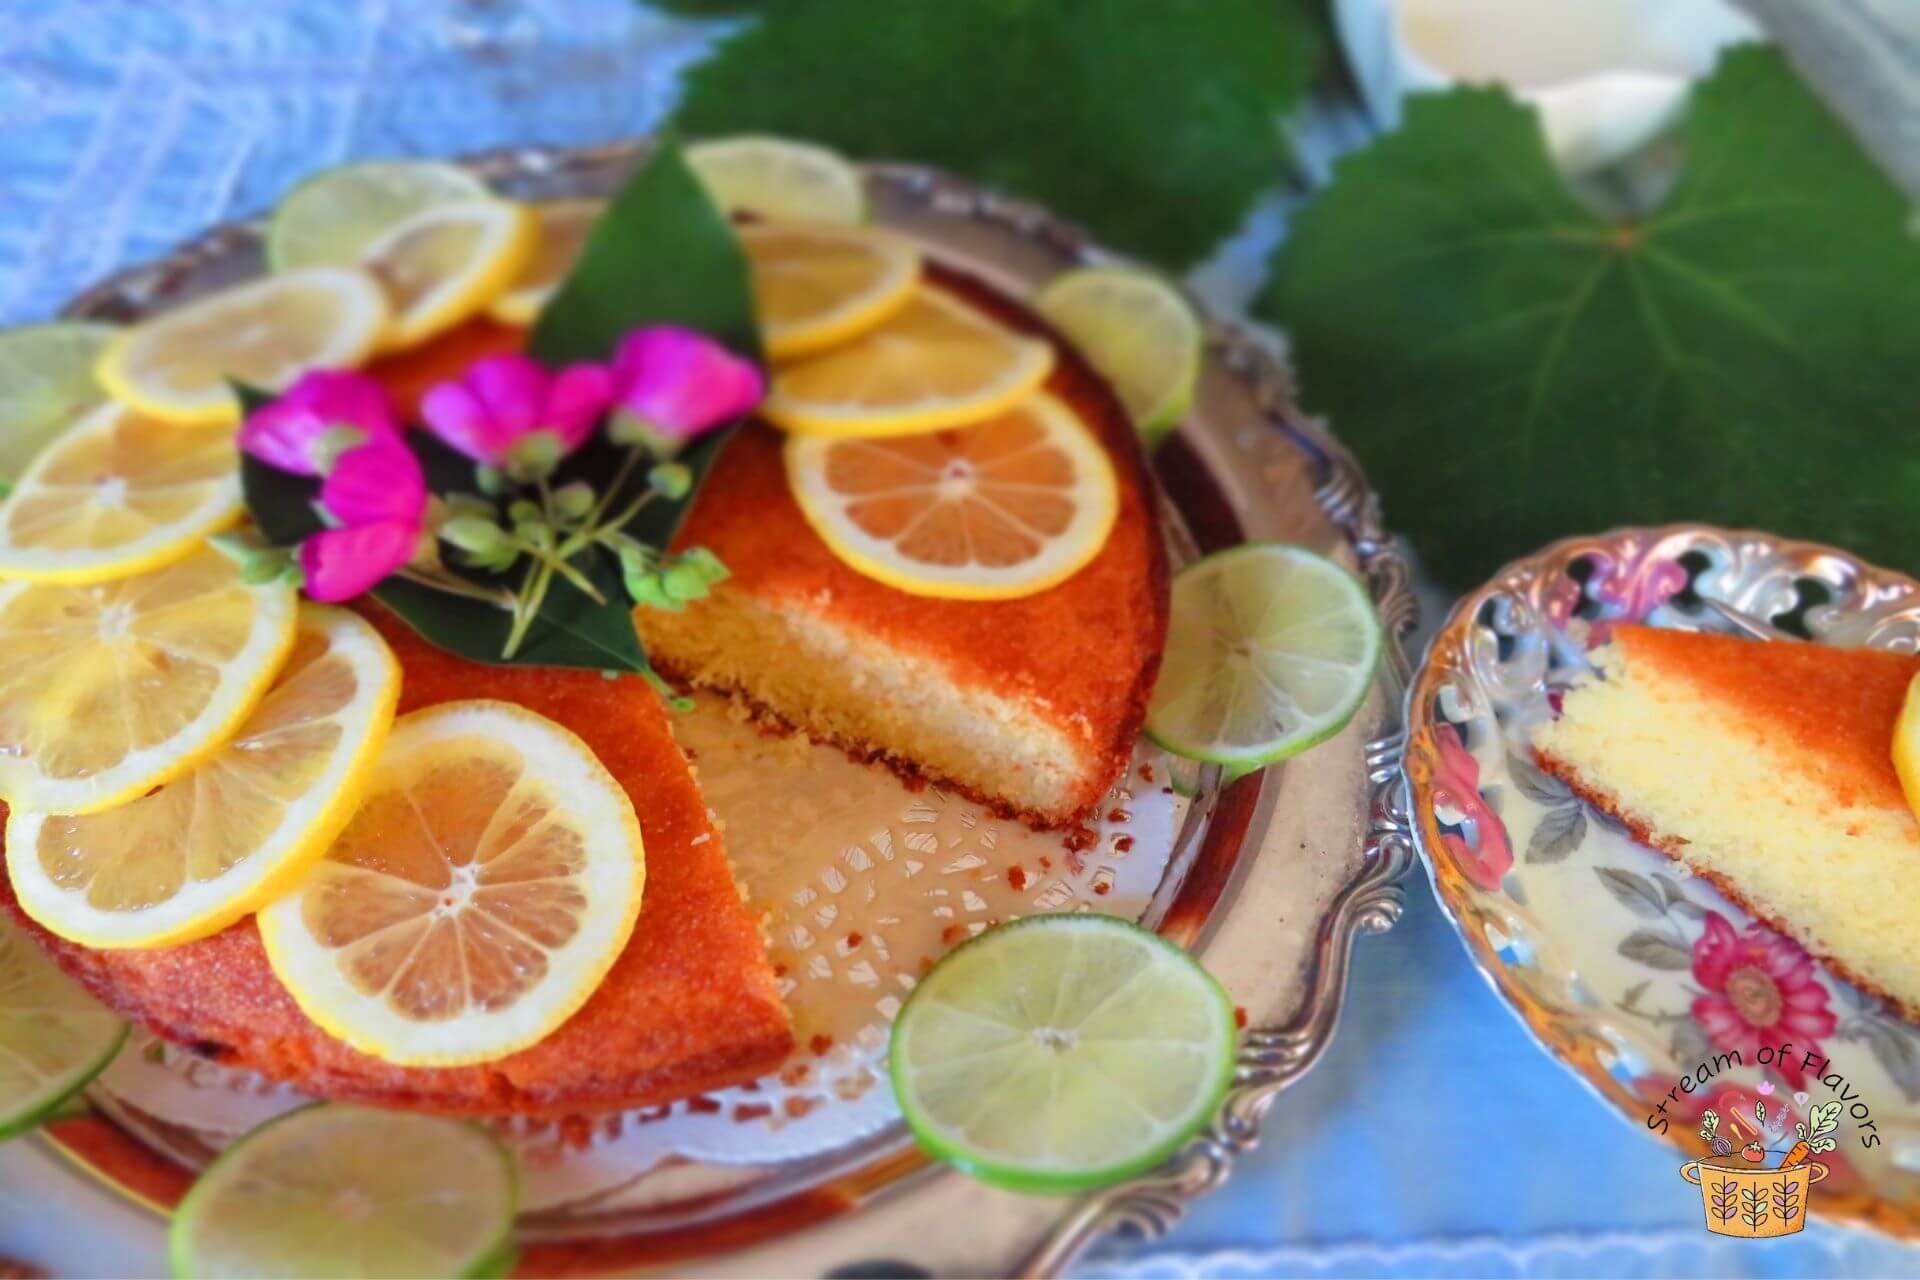 A slice of Greek Semolina Cake on a plate